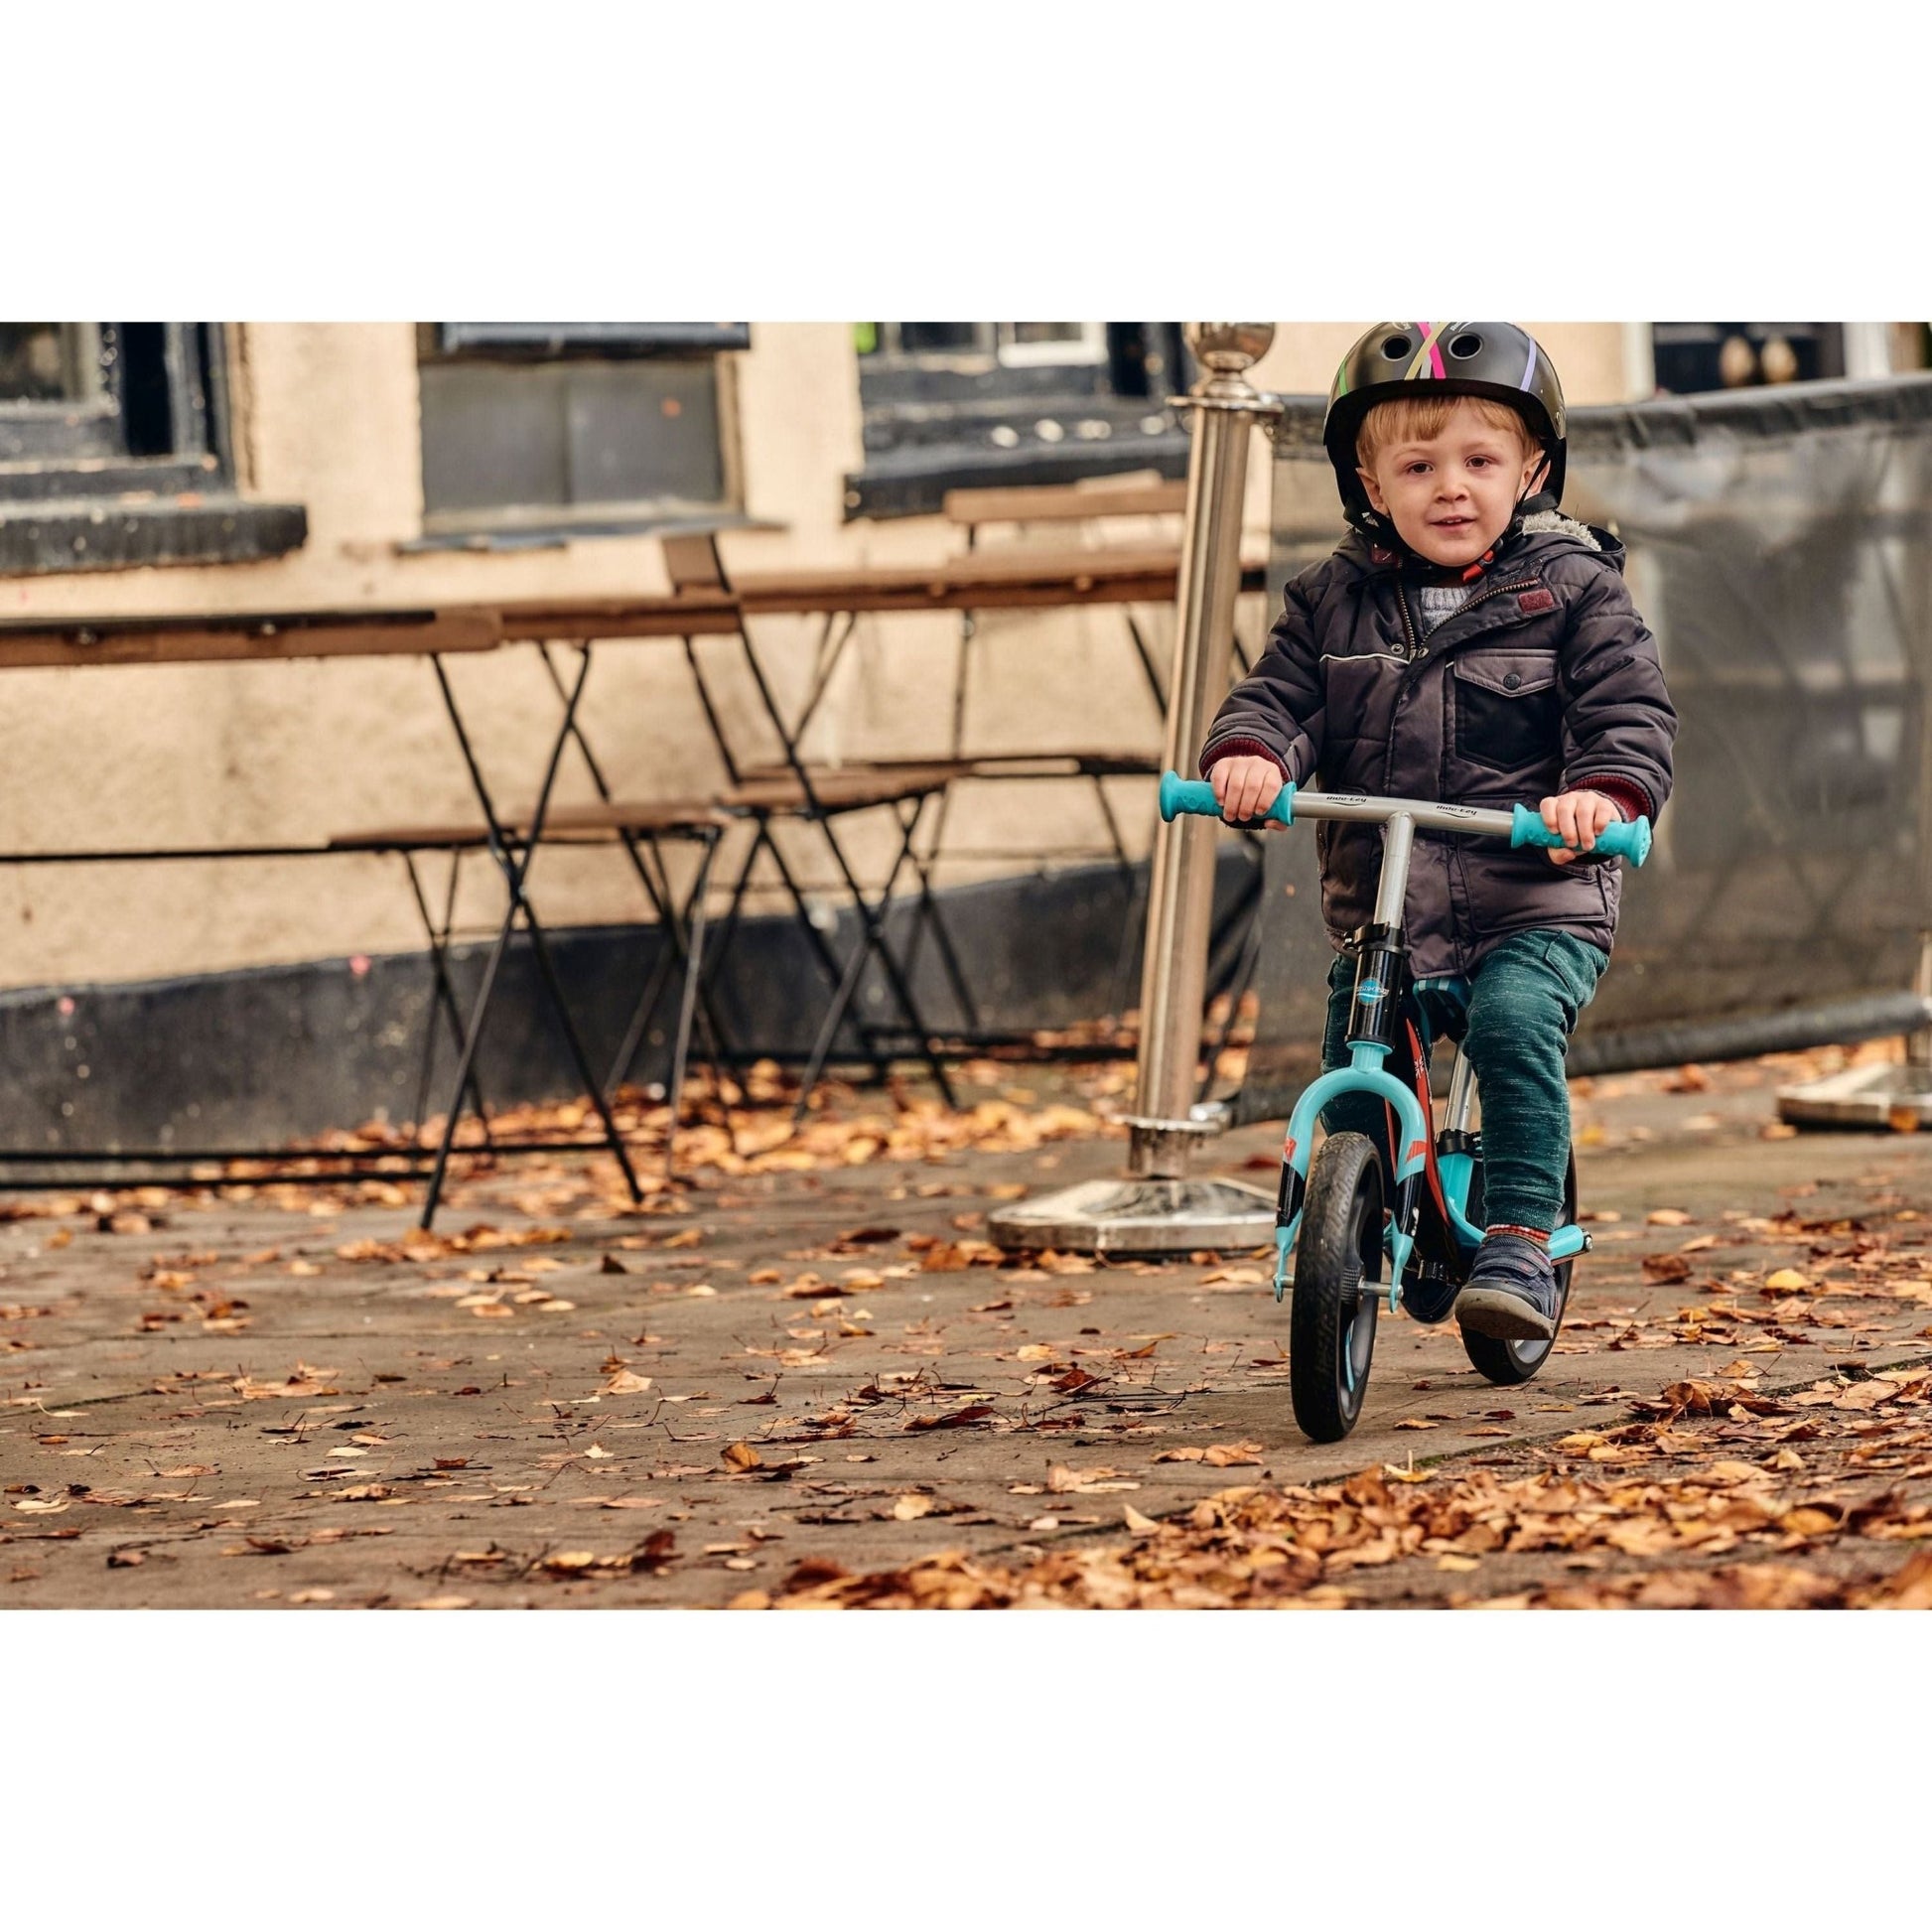 boy riding Ride-Ezy Go Glo Balance Bike - Black & Celeste Green on pavement